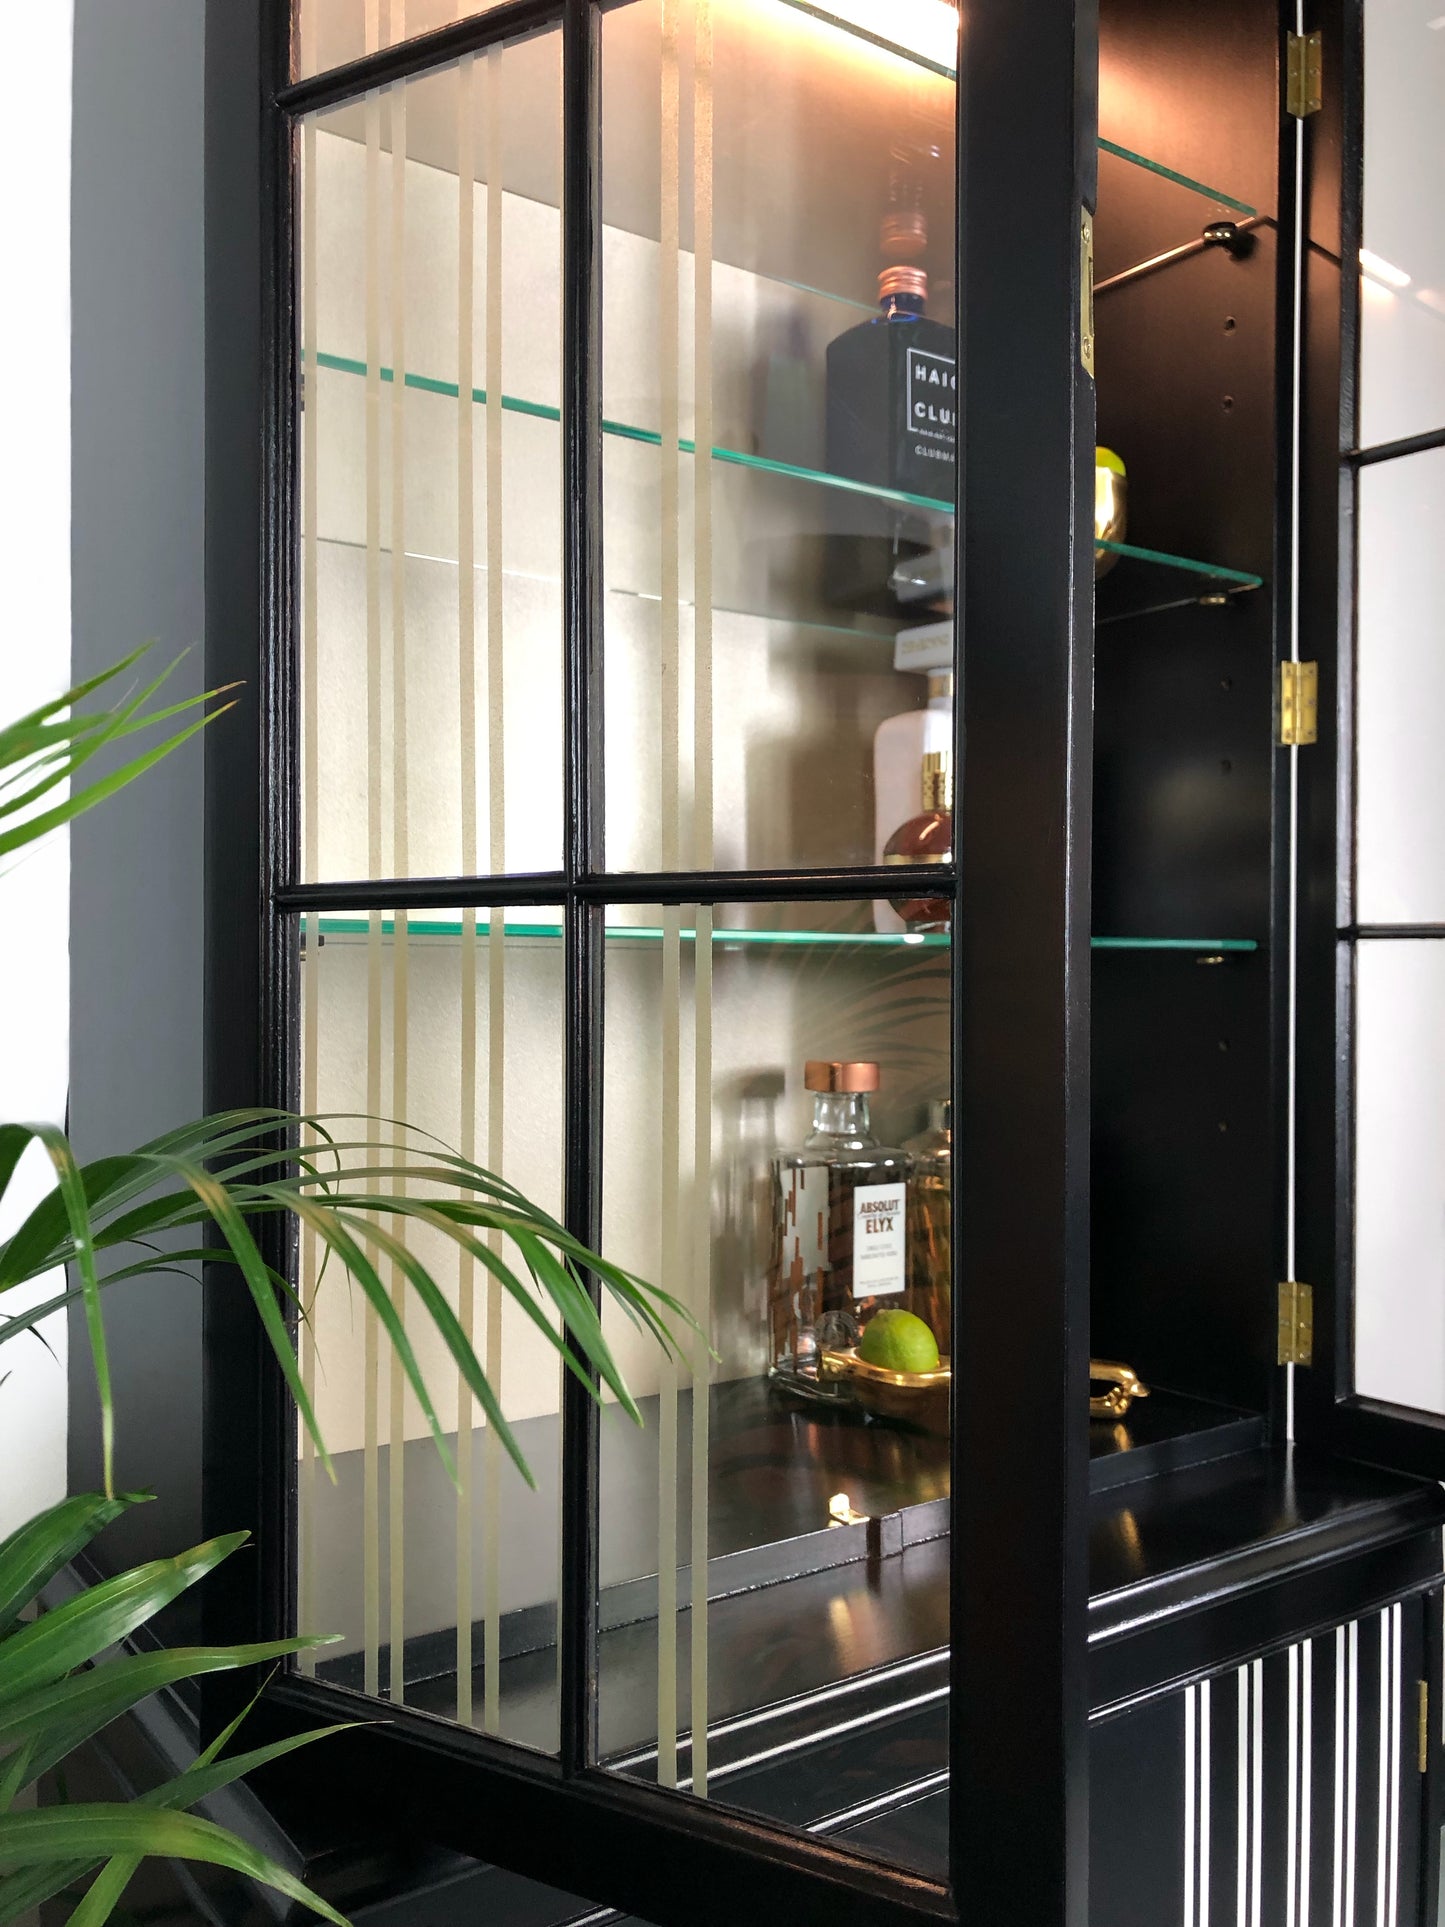 'Mod' - Drinks Cabinet with monochrome geometric design